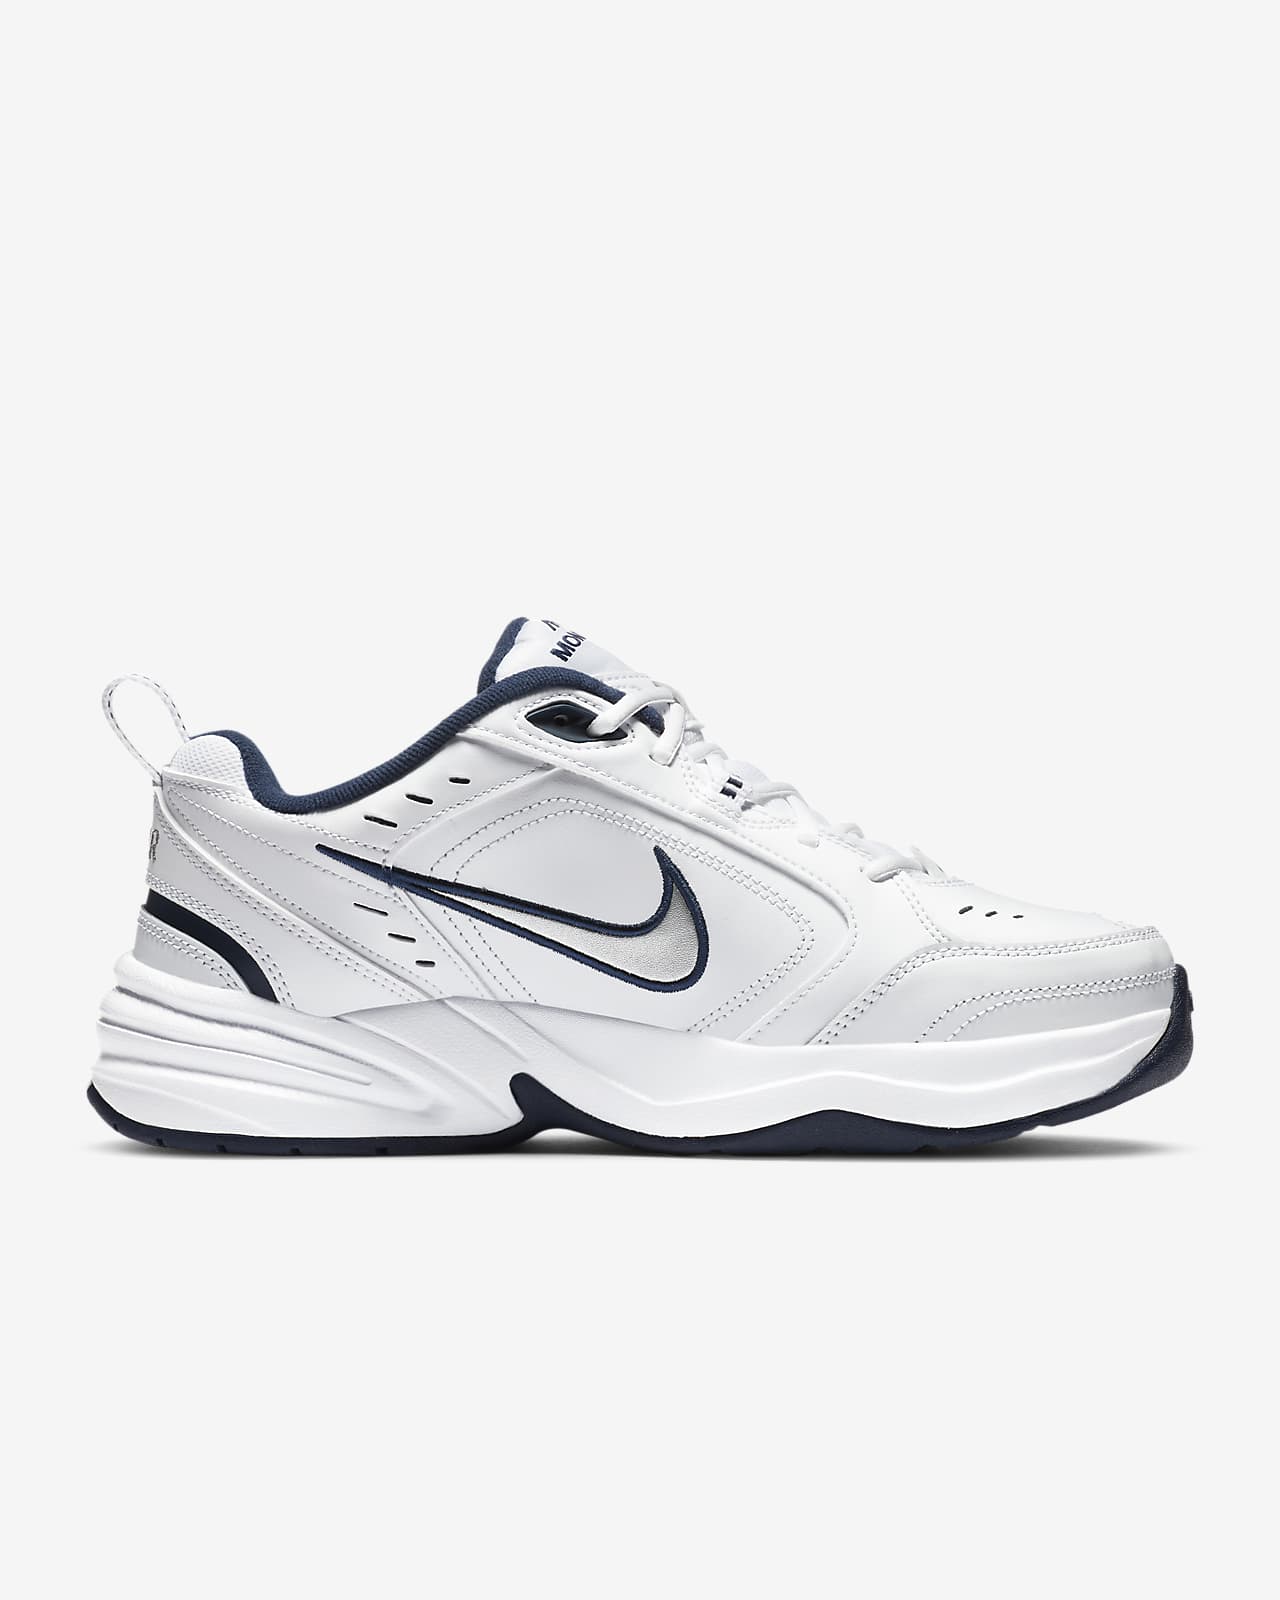 Nike Air Monarch IV Men's Cross-Training Shoes, Size: 13 4E, White